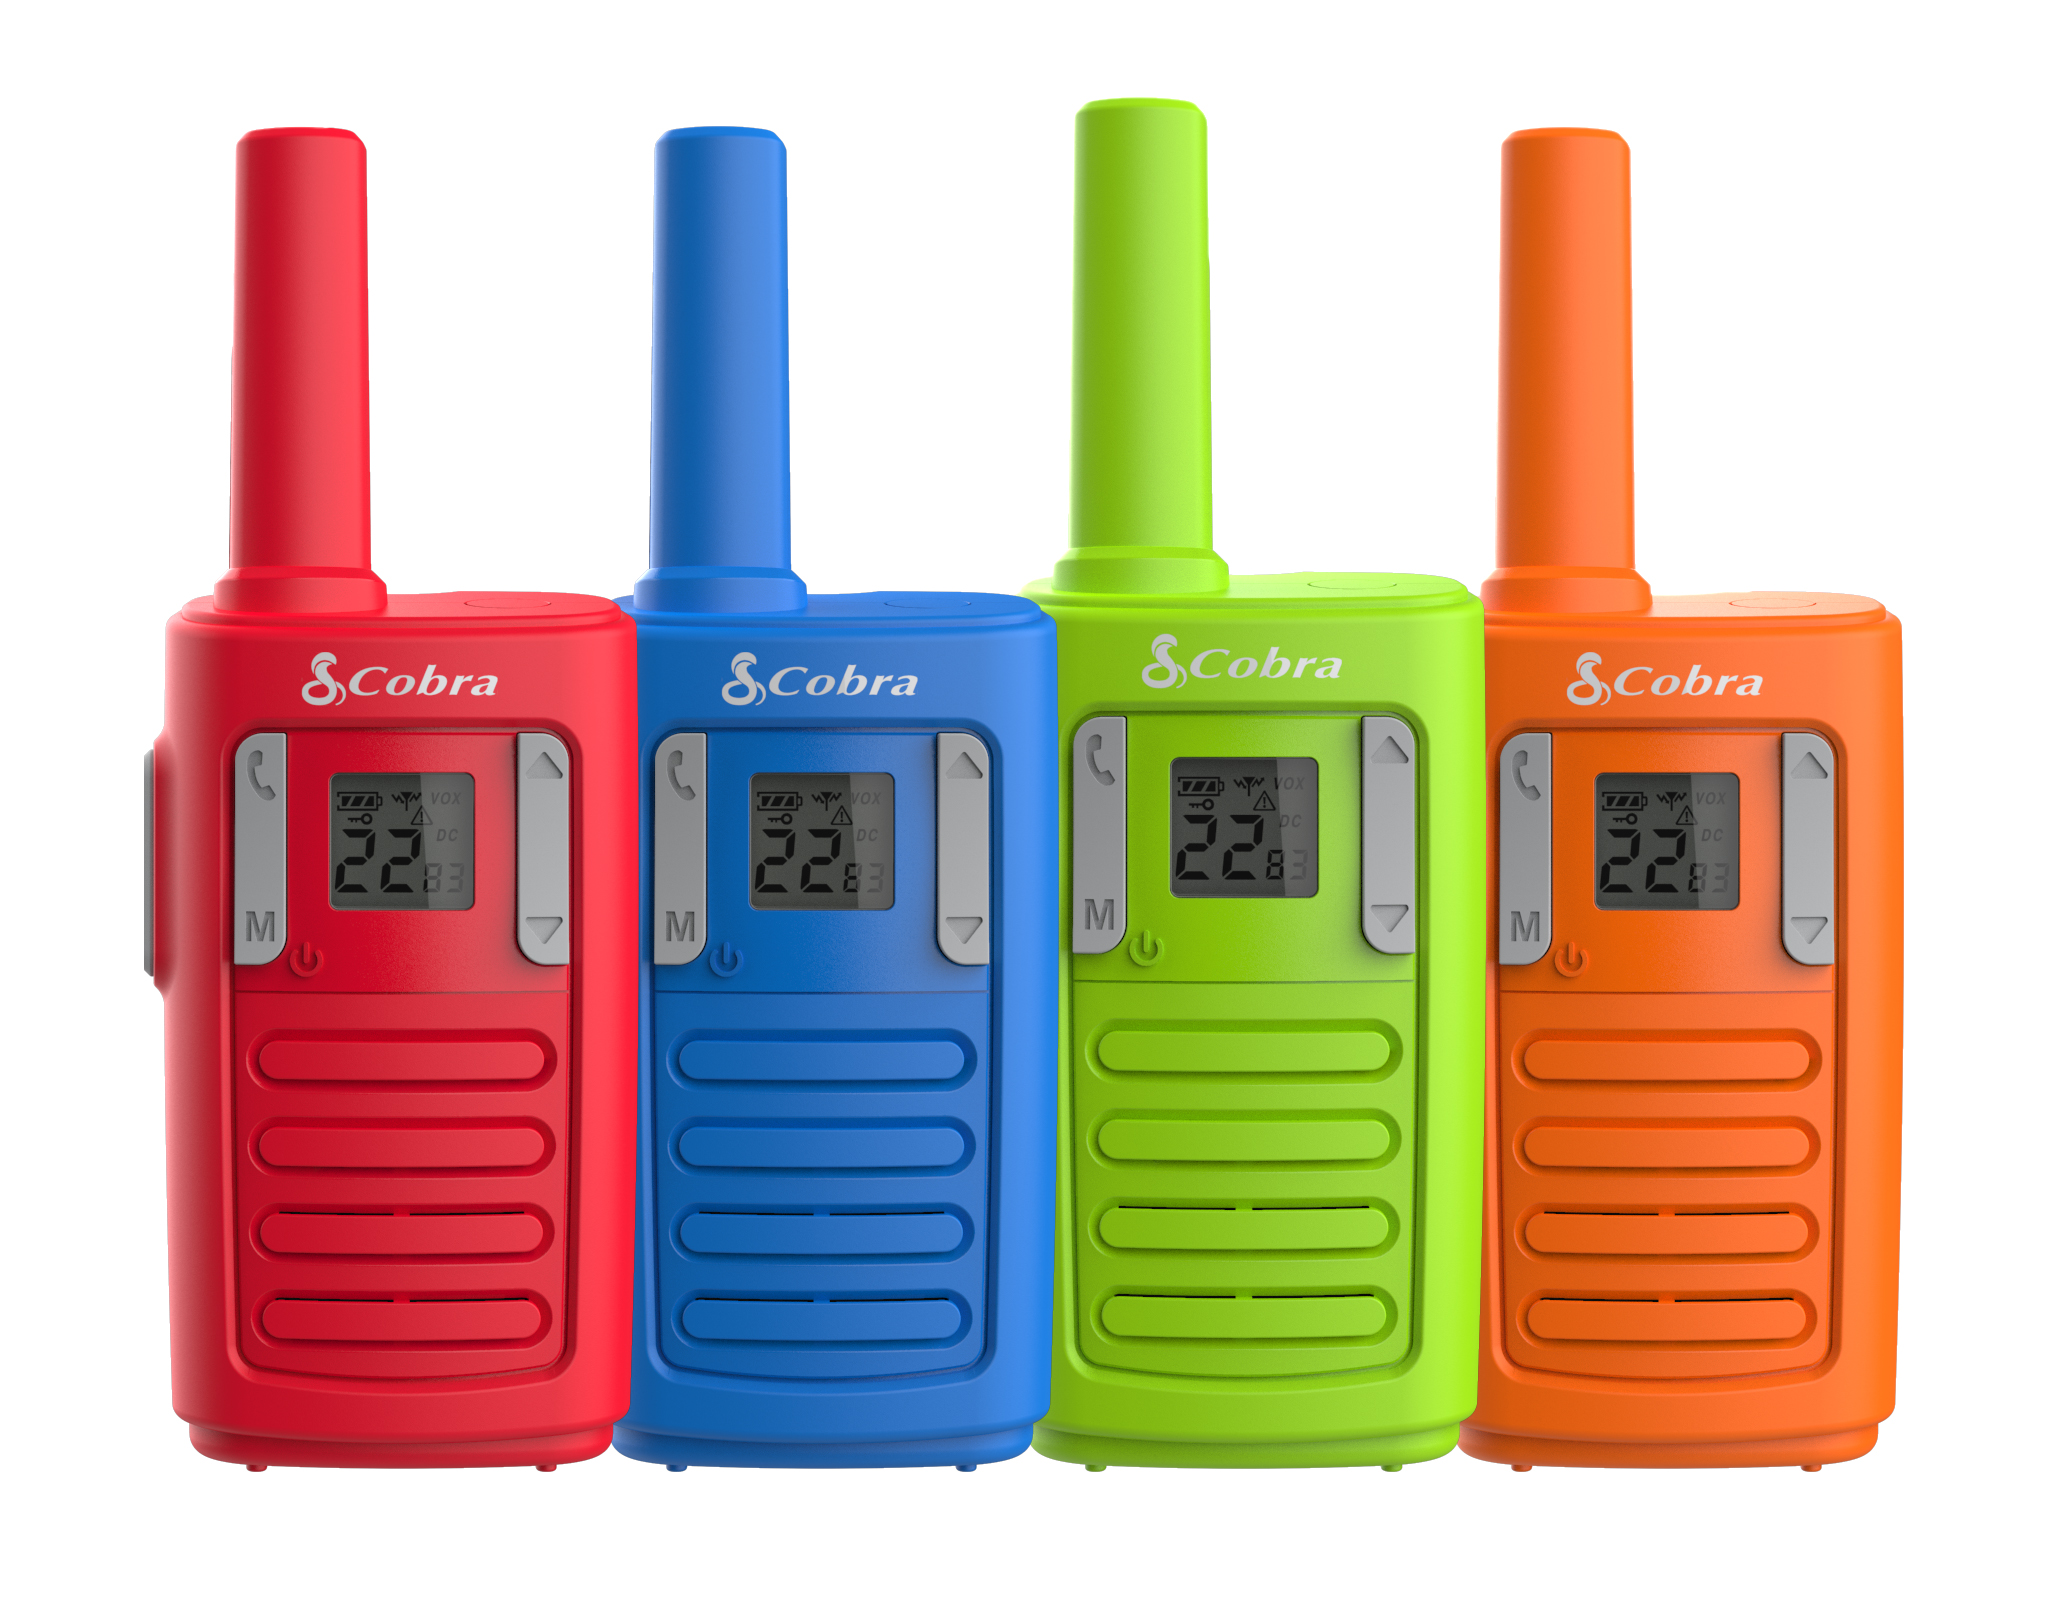 Cobra RX100-4 Two-Way Radios Family (4-Pack) Kid Friendly Walkie Talkies  with 16 Mile Range 22 Channels, 10 NOAA Emergency Radio Weather Channels 